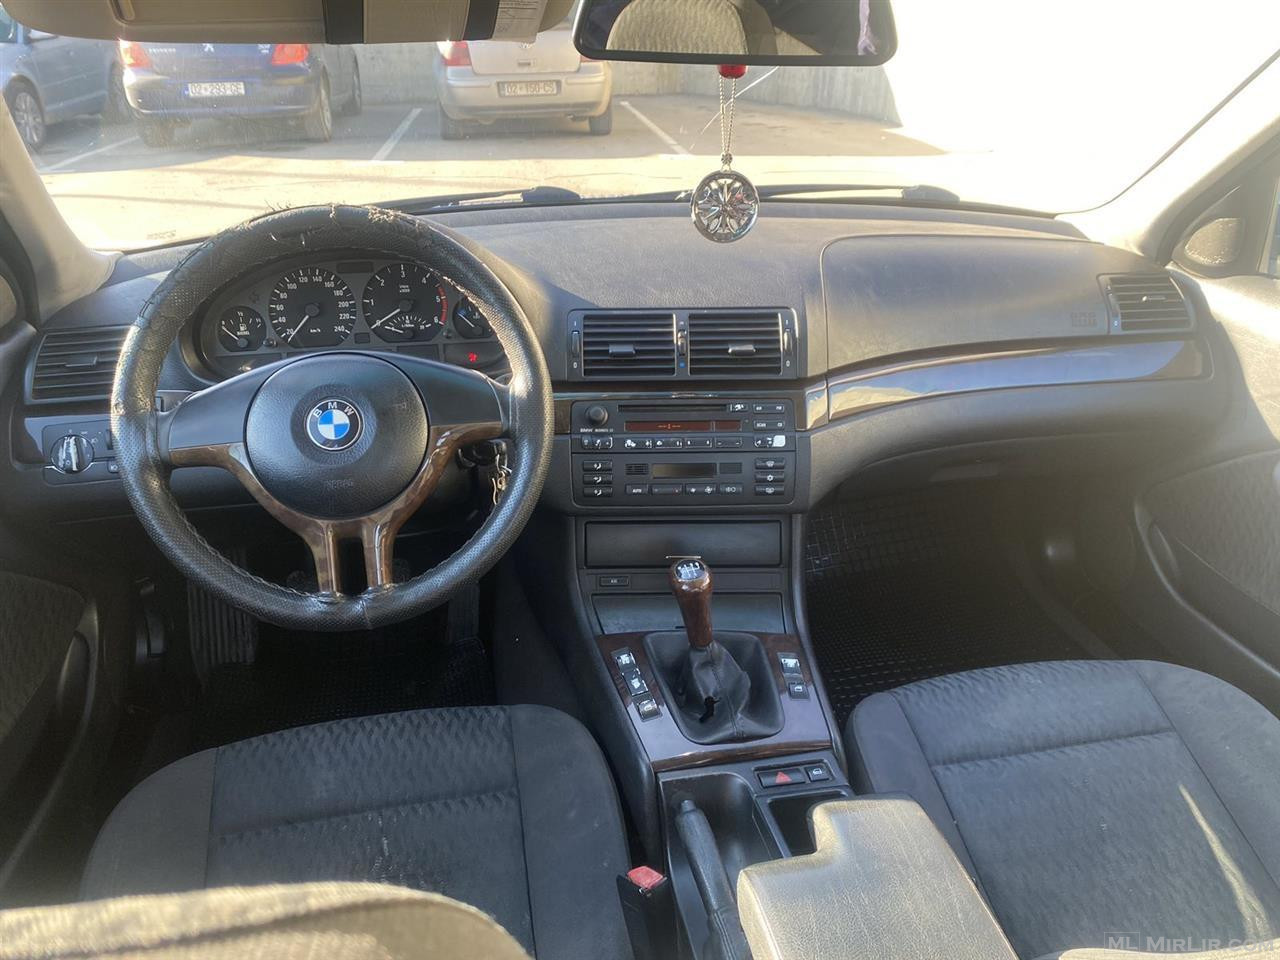 BMW 320 